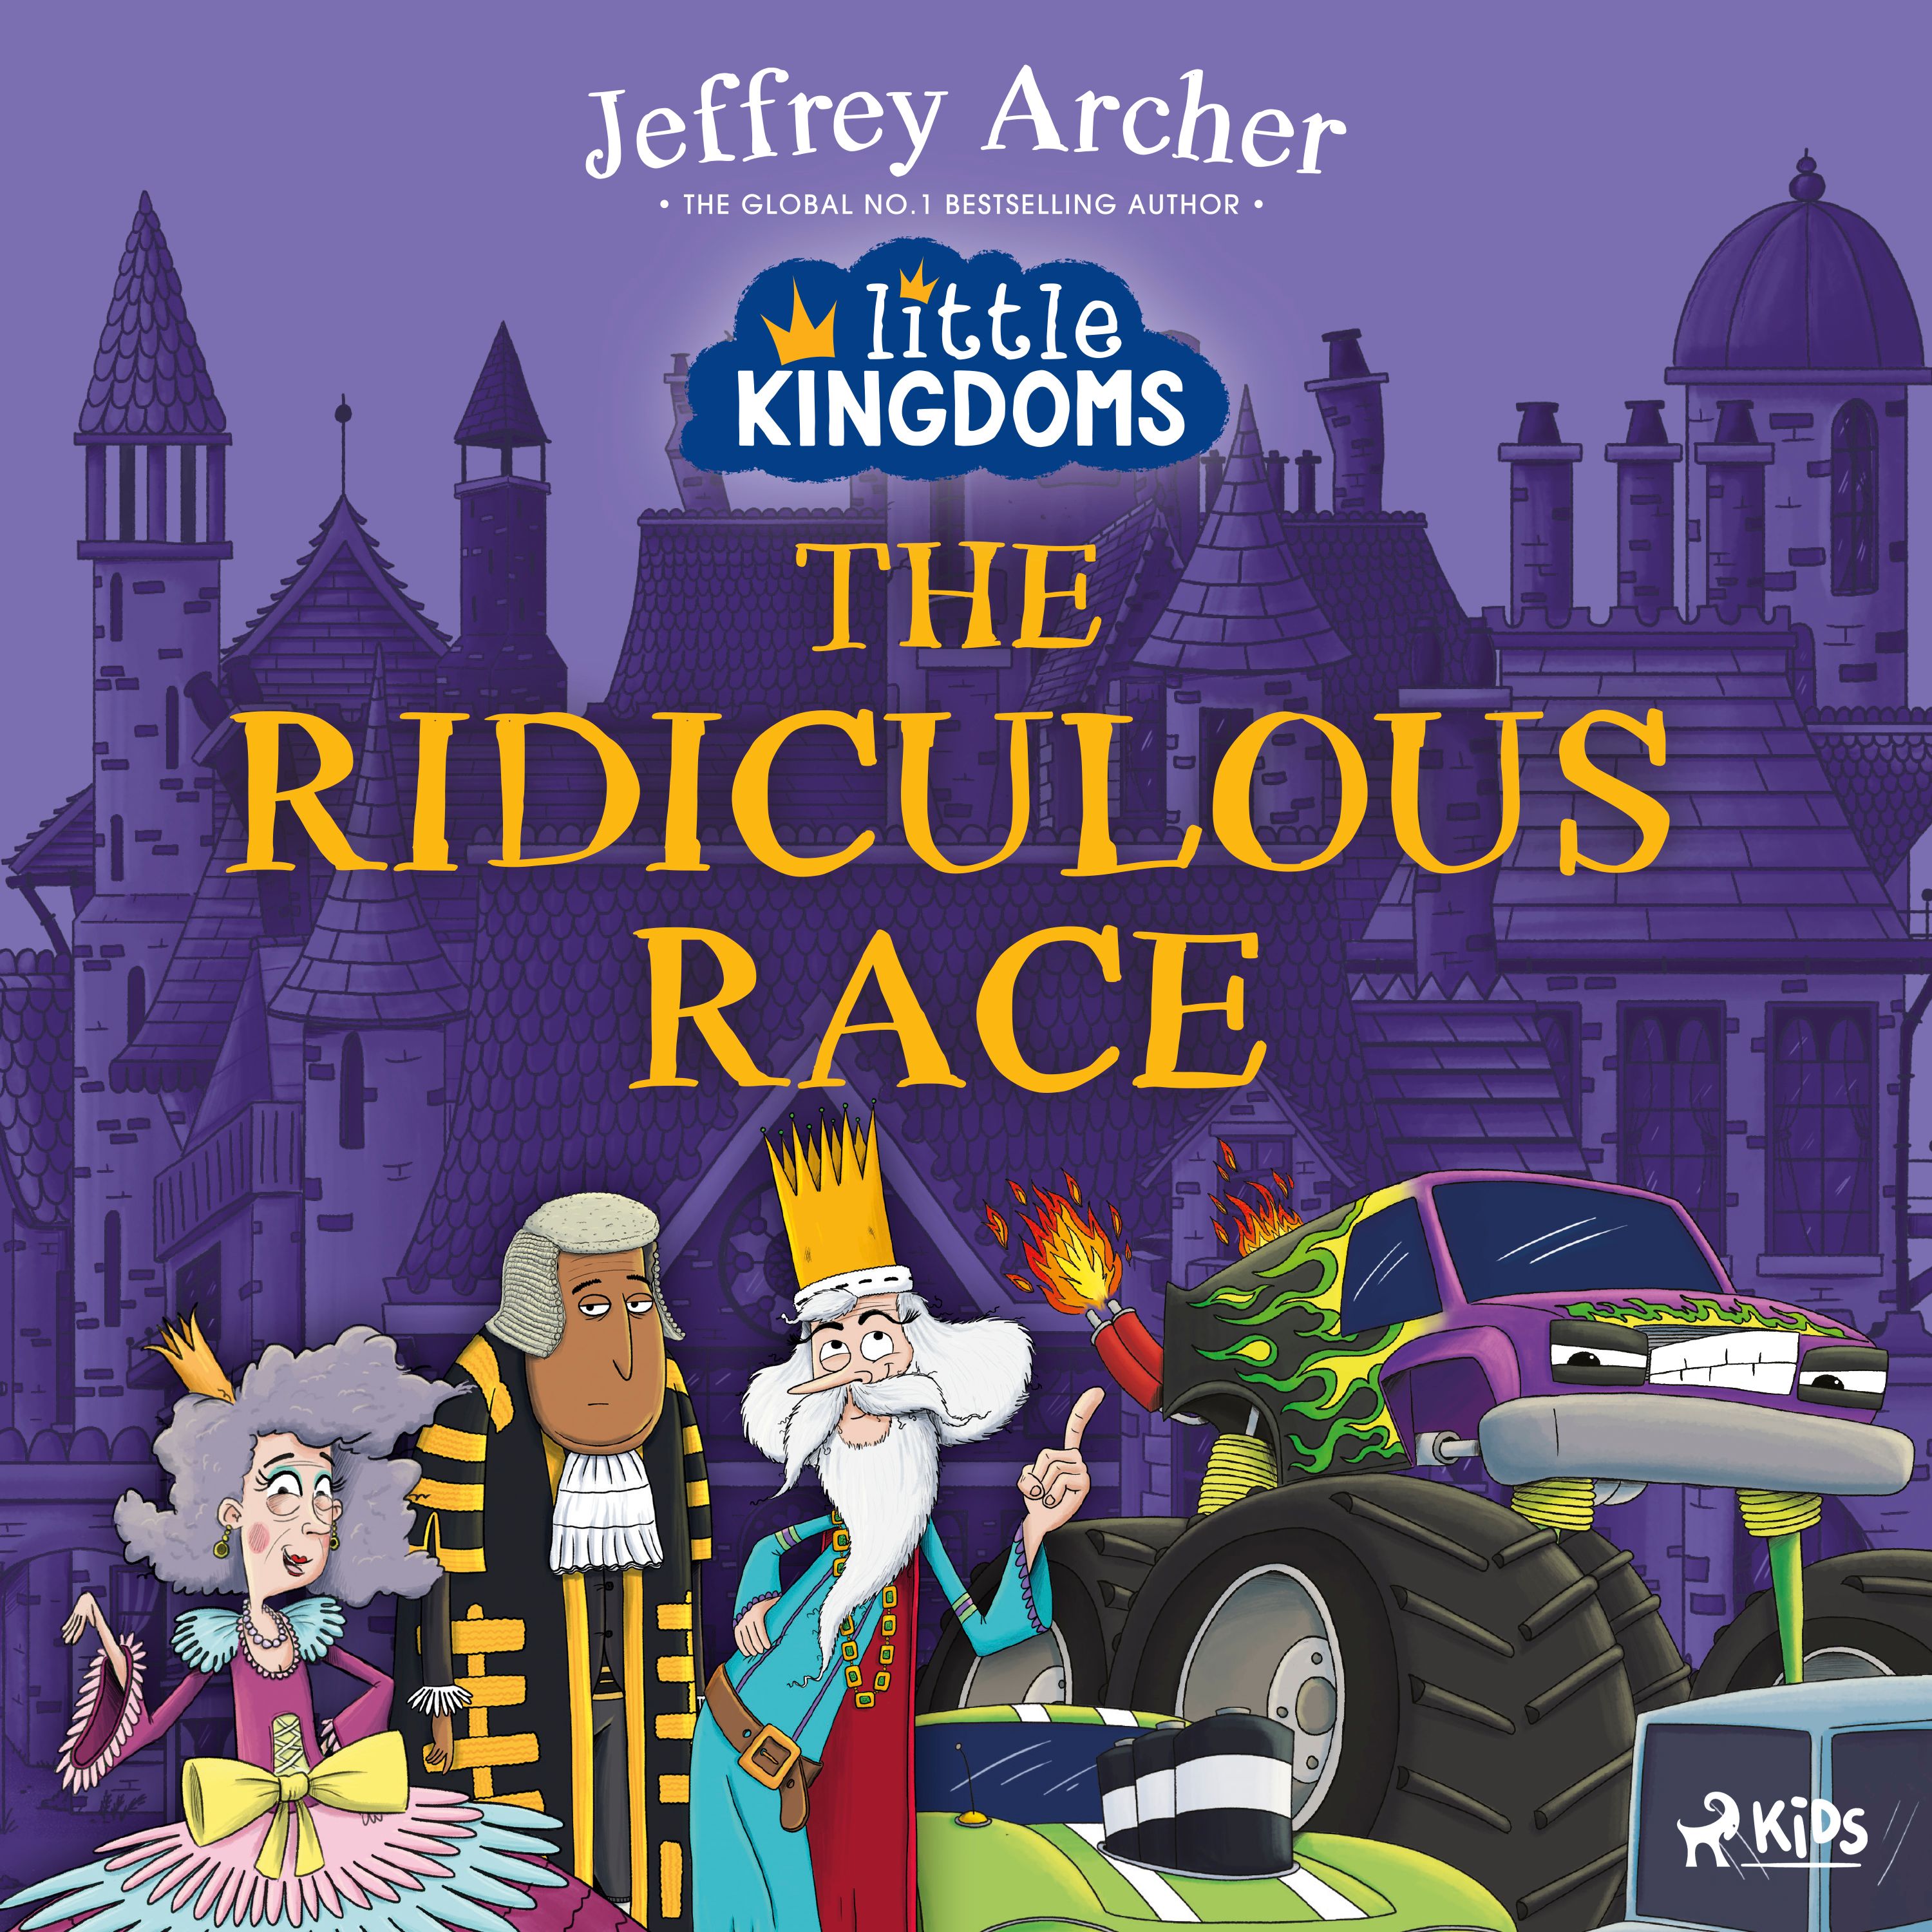 Little Kingdoms: The Ridiculous Race, ljudbok av Jeffrey Archer